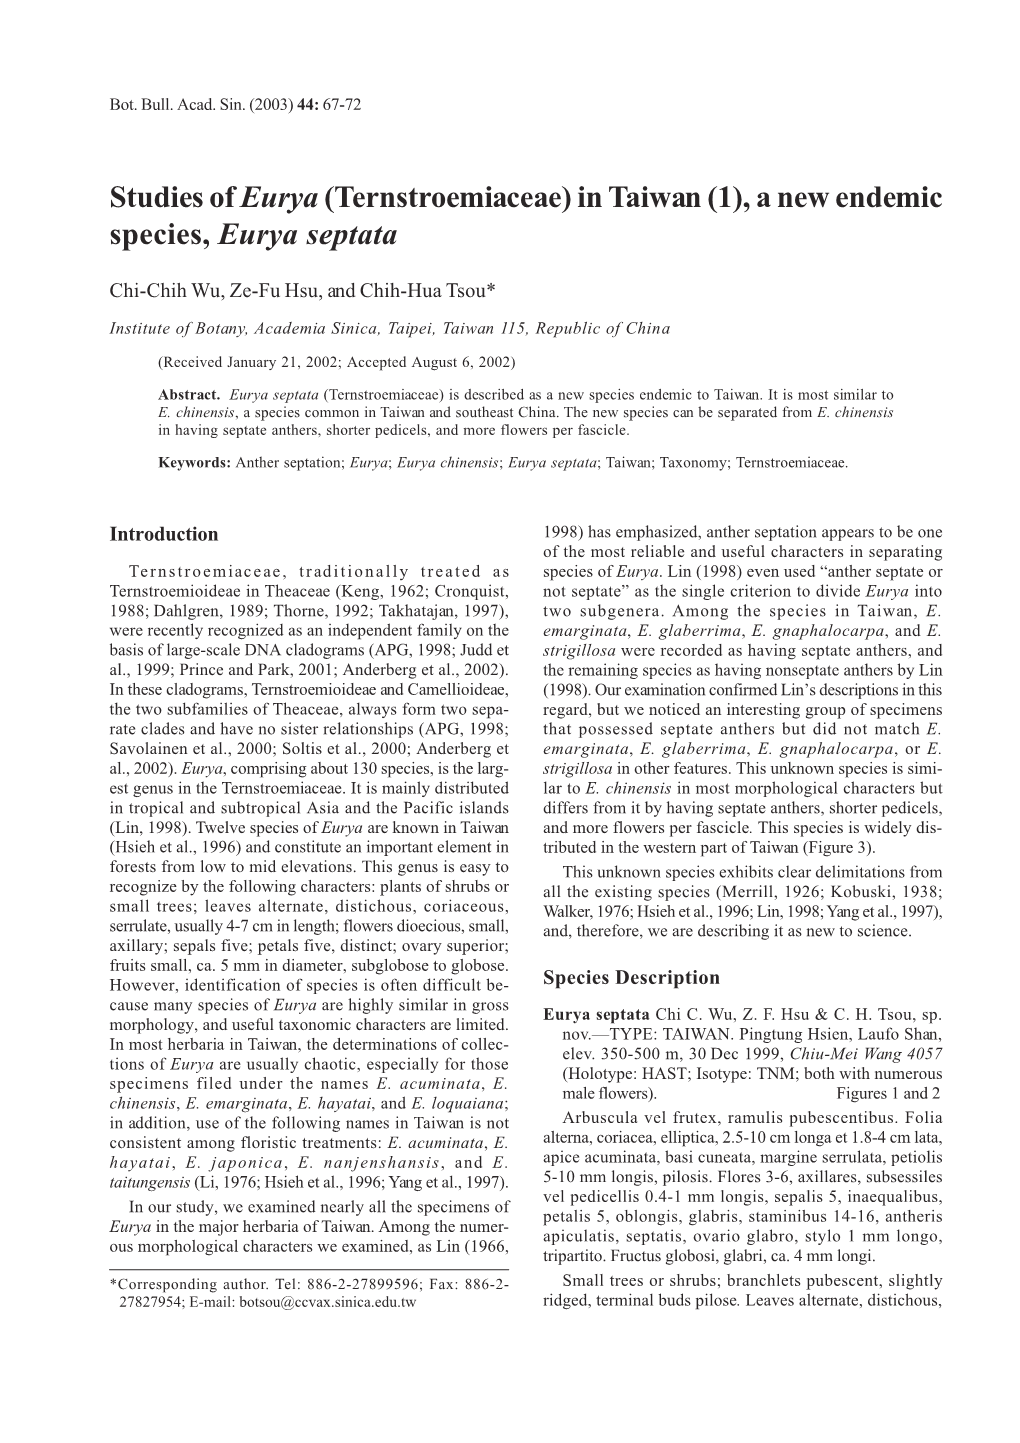 A New Endemic Species, Eurya Septata